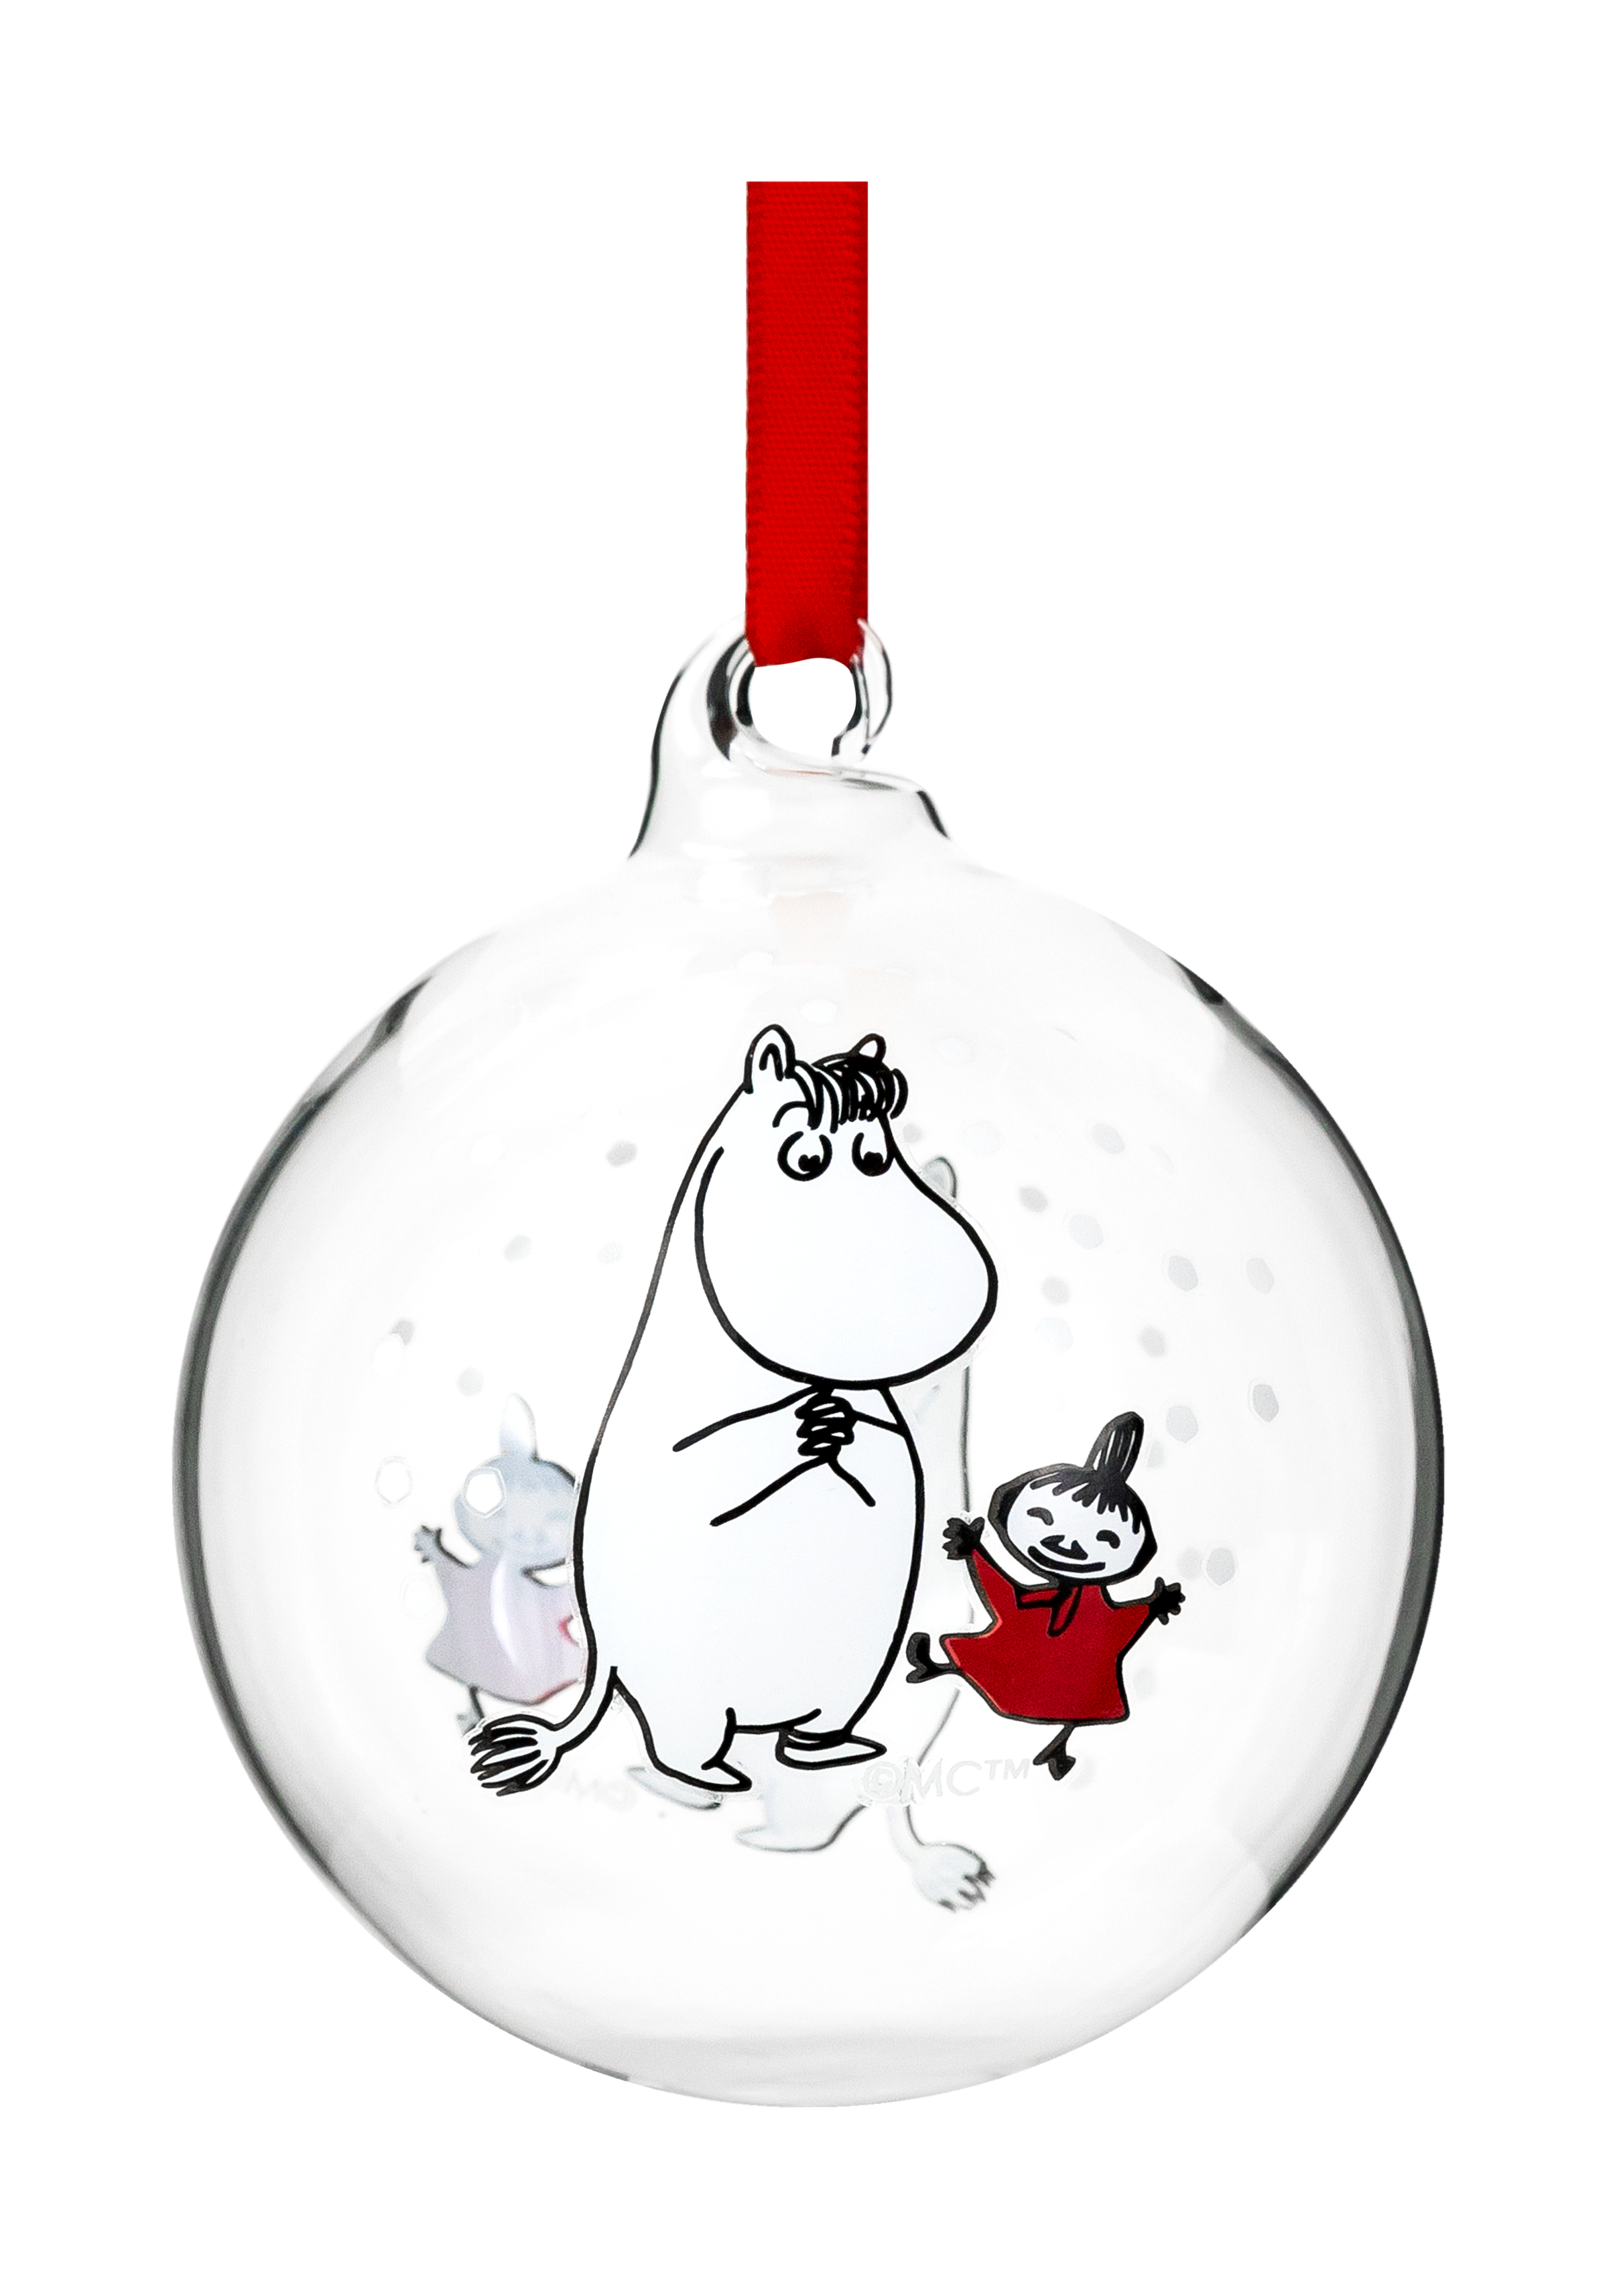 Moomin by Muurla - Snorkmaiden decoration ball 7cm